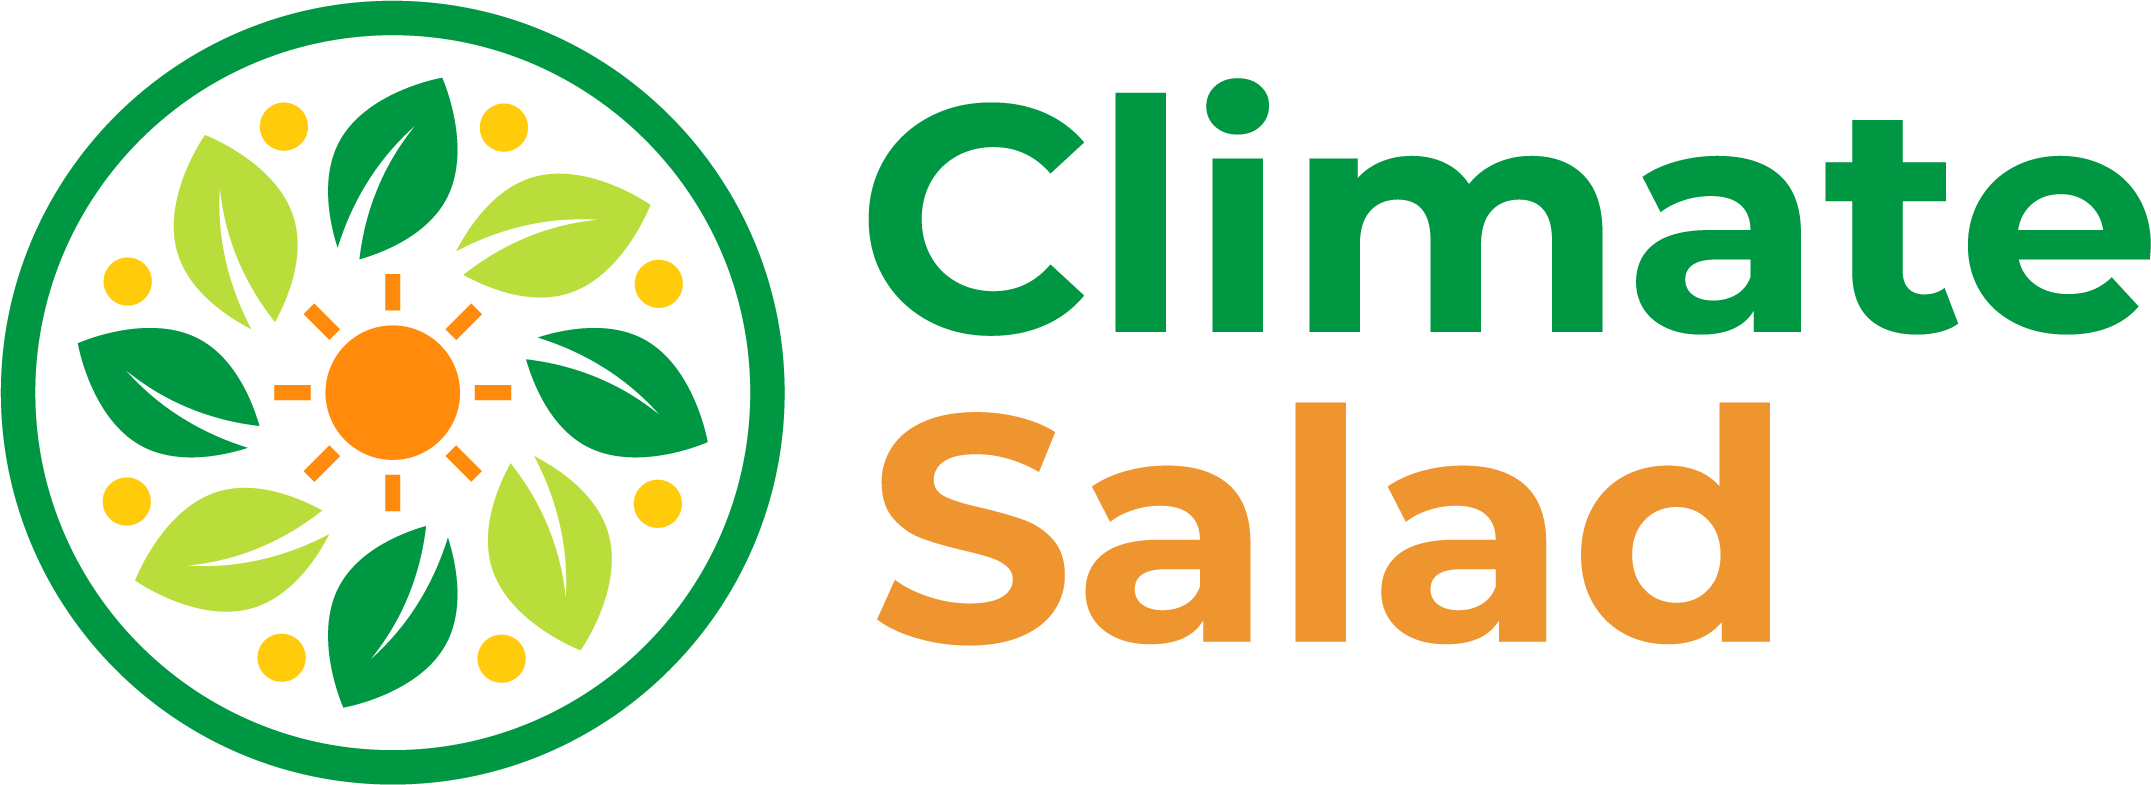 Climate Salad logo